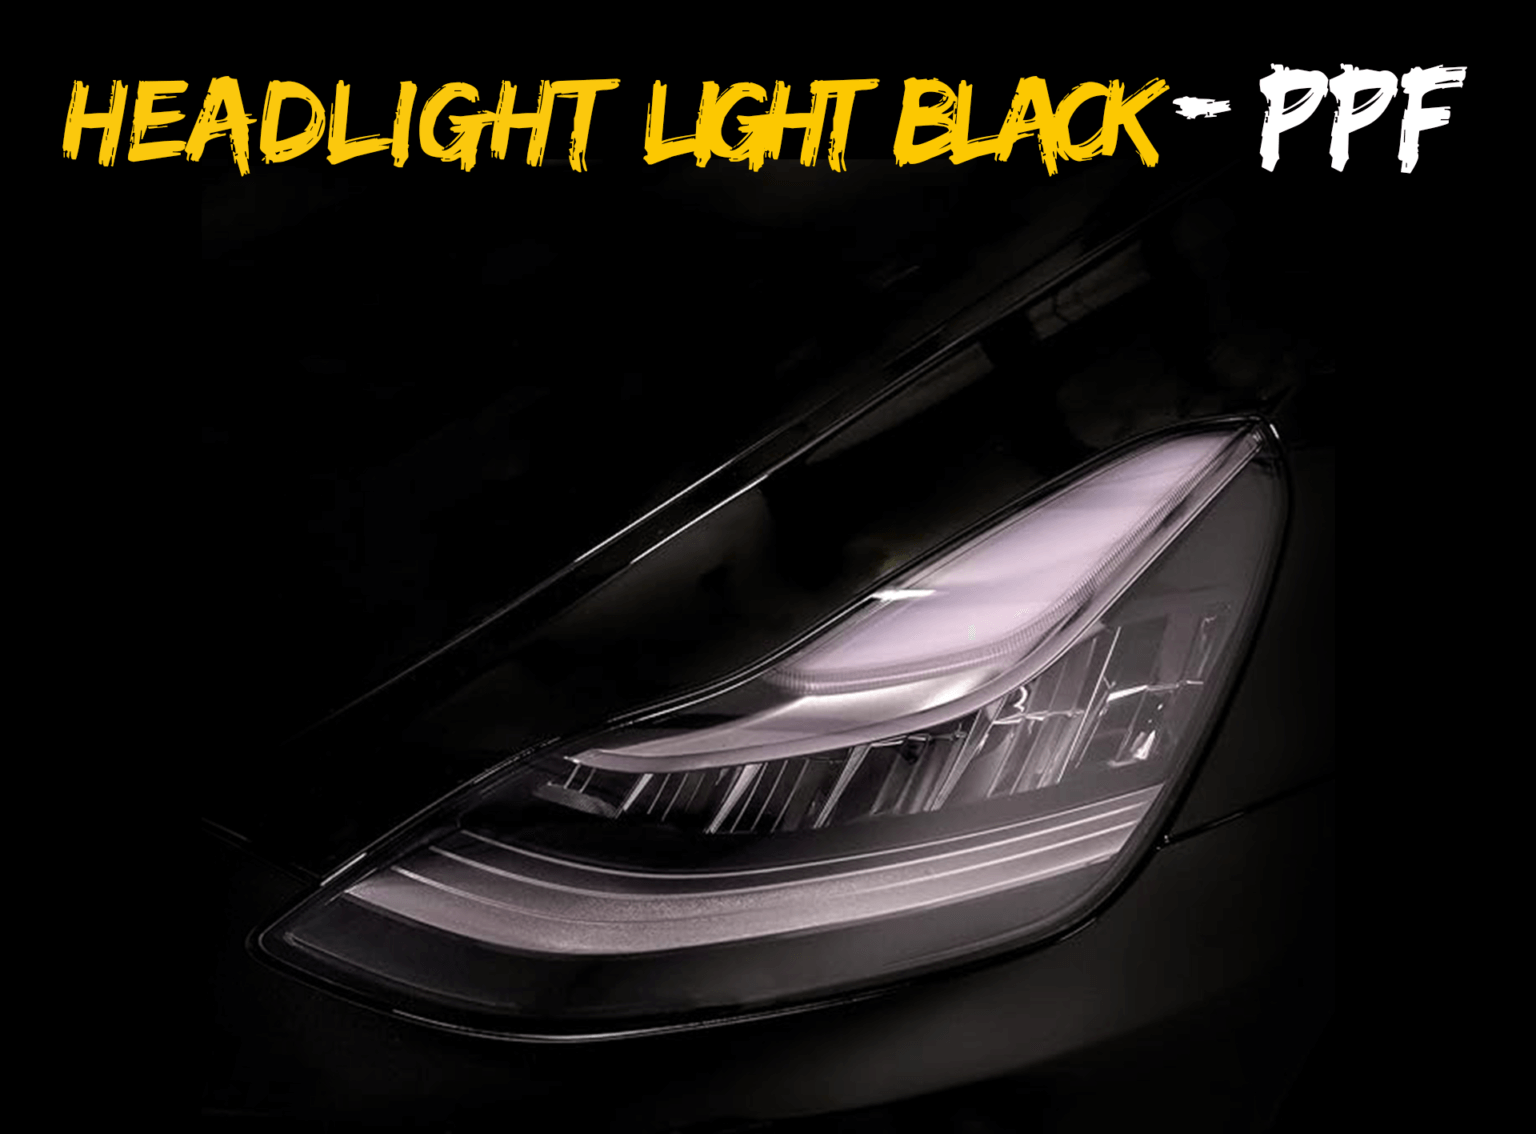 headlight_light_black_ppf-2-1536x1134